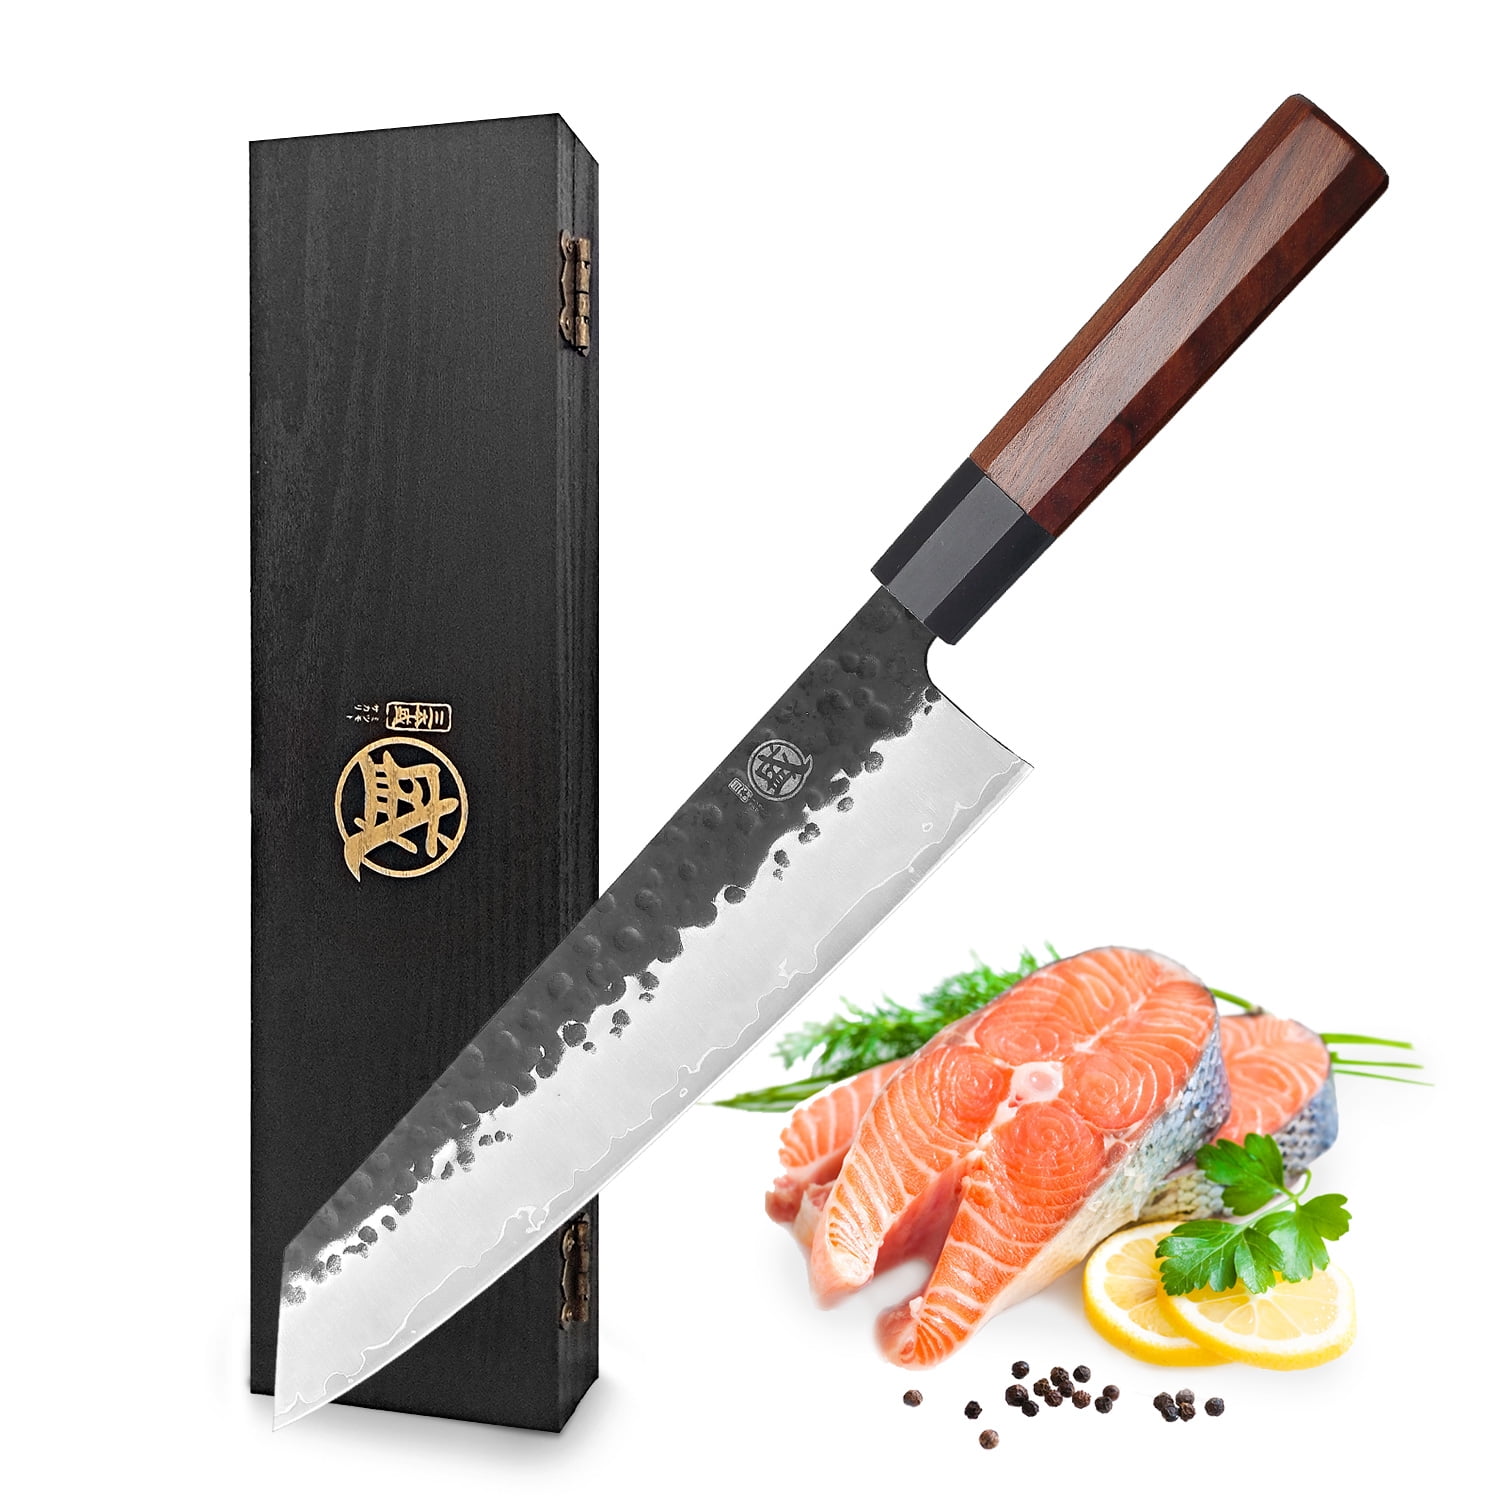 KEEMAKE 7 inch Nakiri Knife Japanese Chef Knife